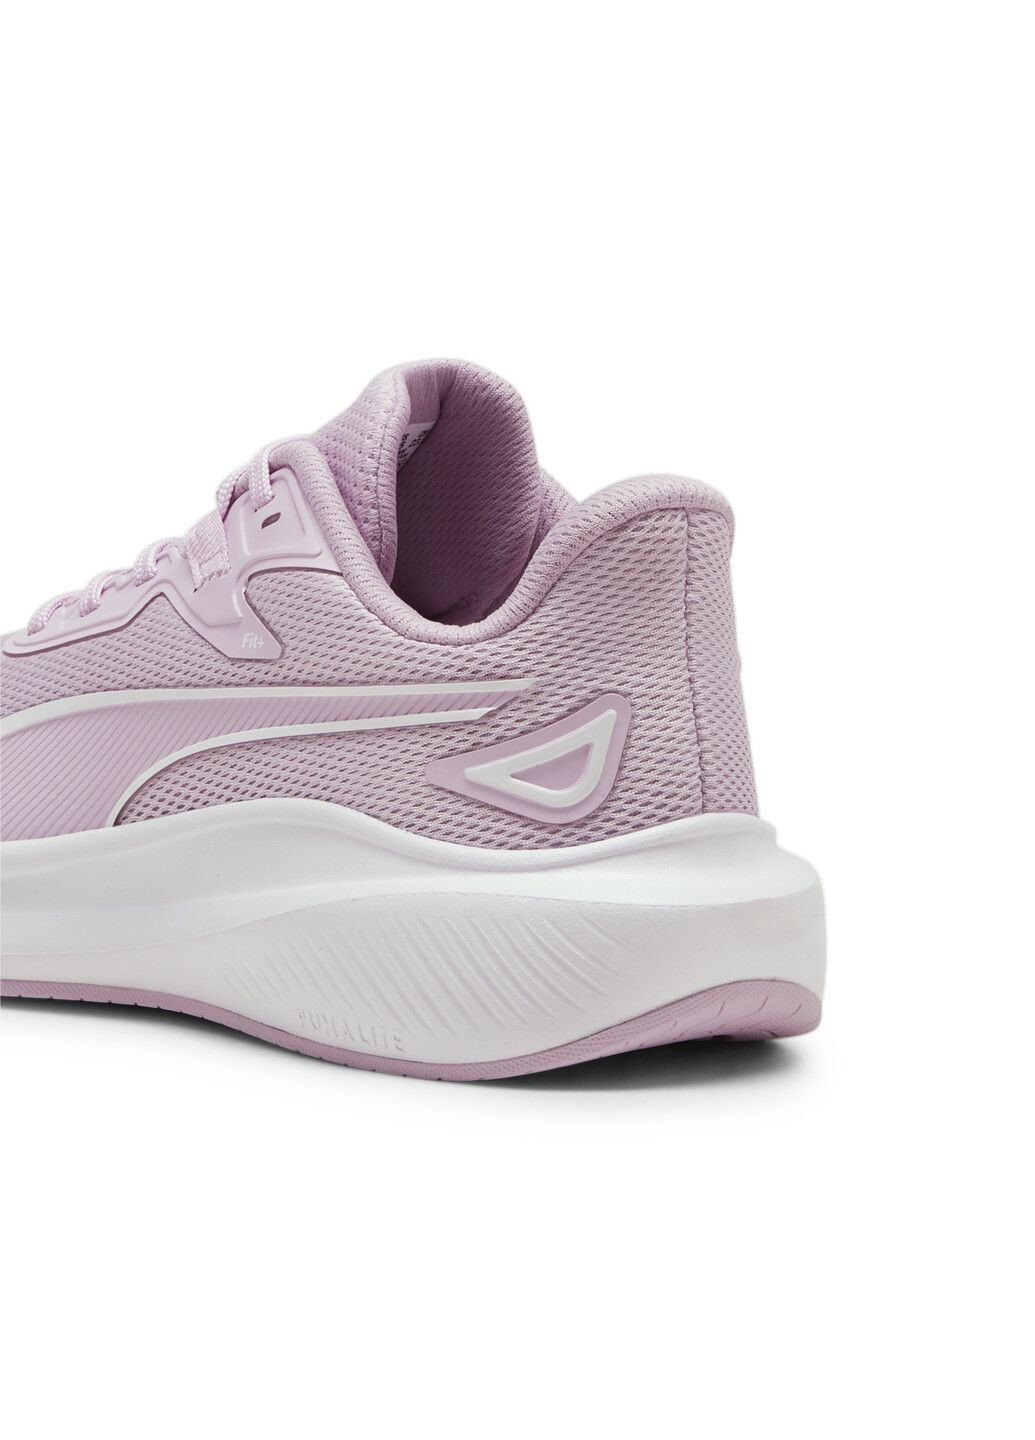 Фіолетові всесезонні кросівки skyrocket lite running shoes Puma